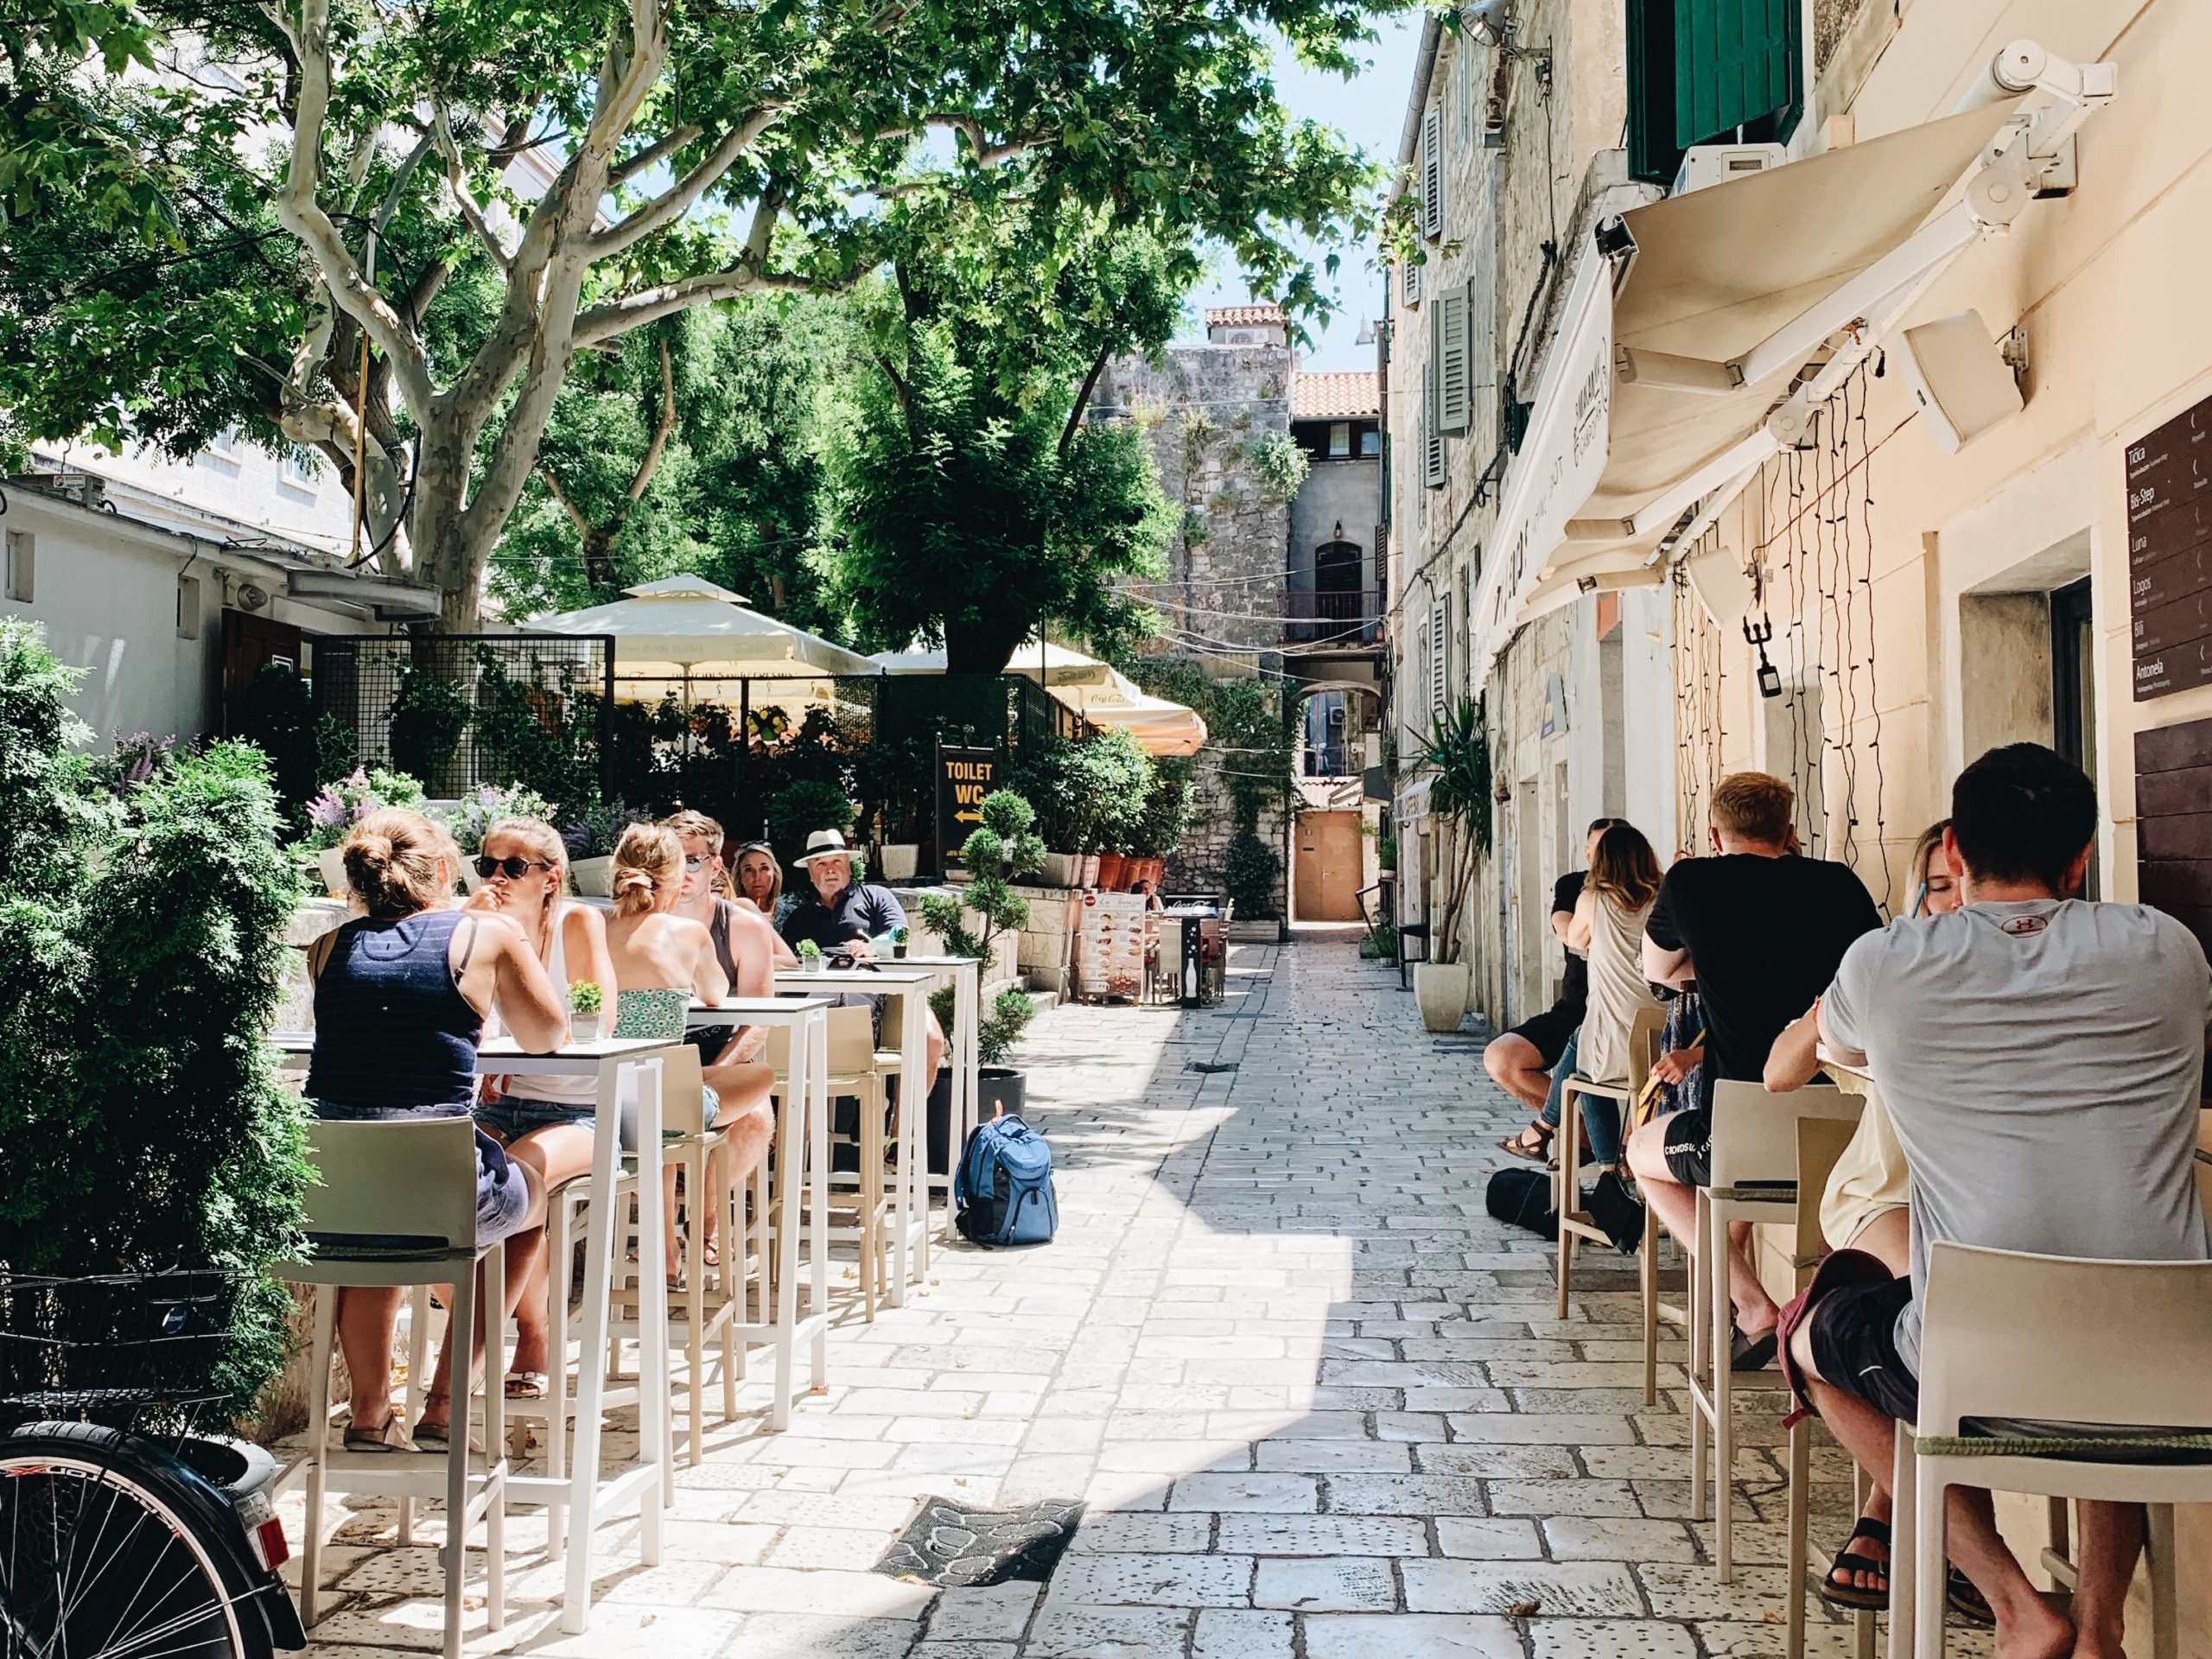 Cafes in Split, Croatia